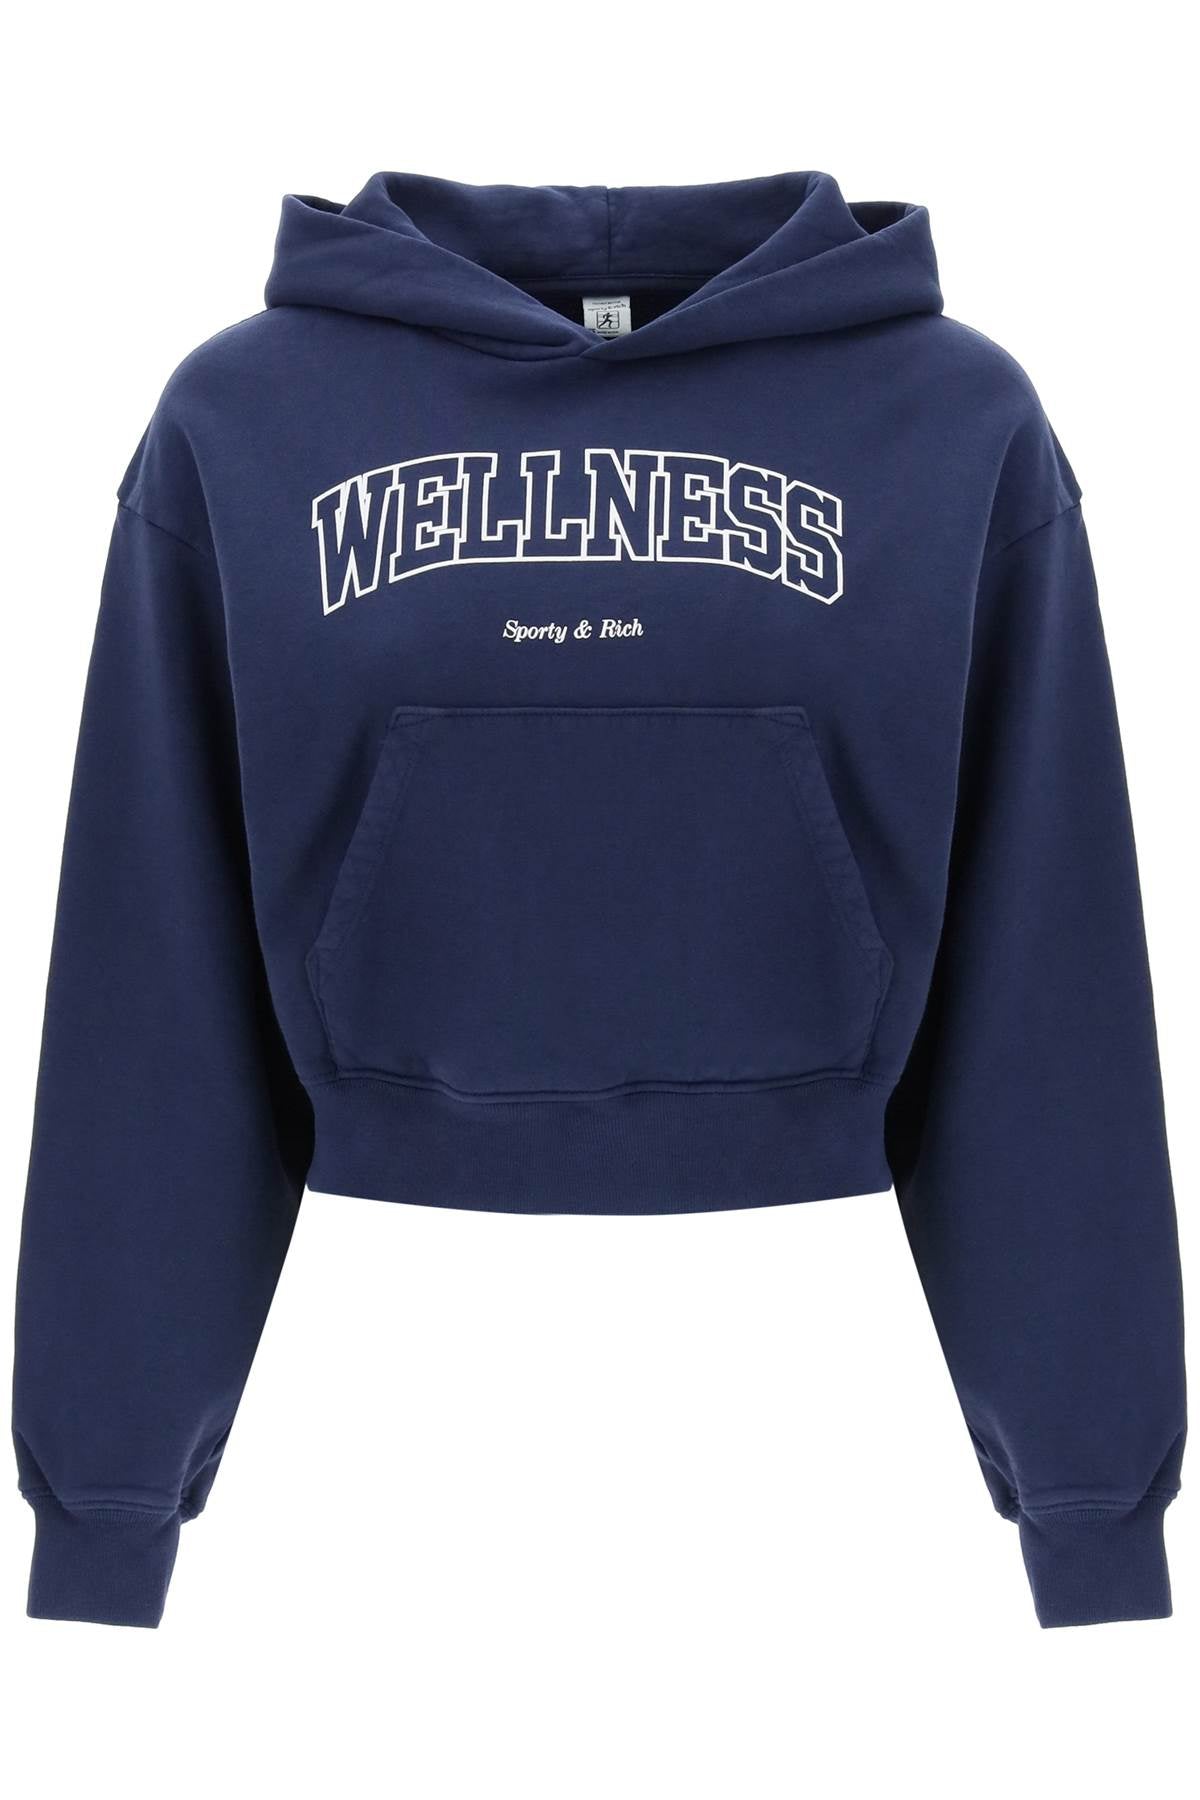 Sporty rich wellness cropped hoodie-Sporty & Rich-XS-Urbanheer